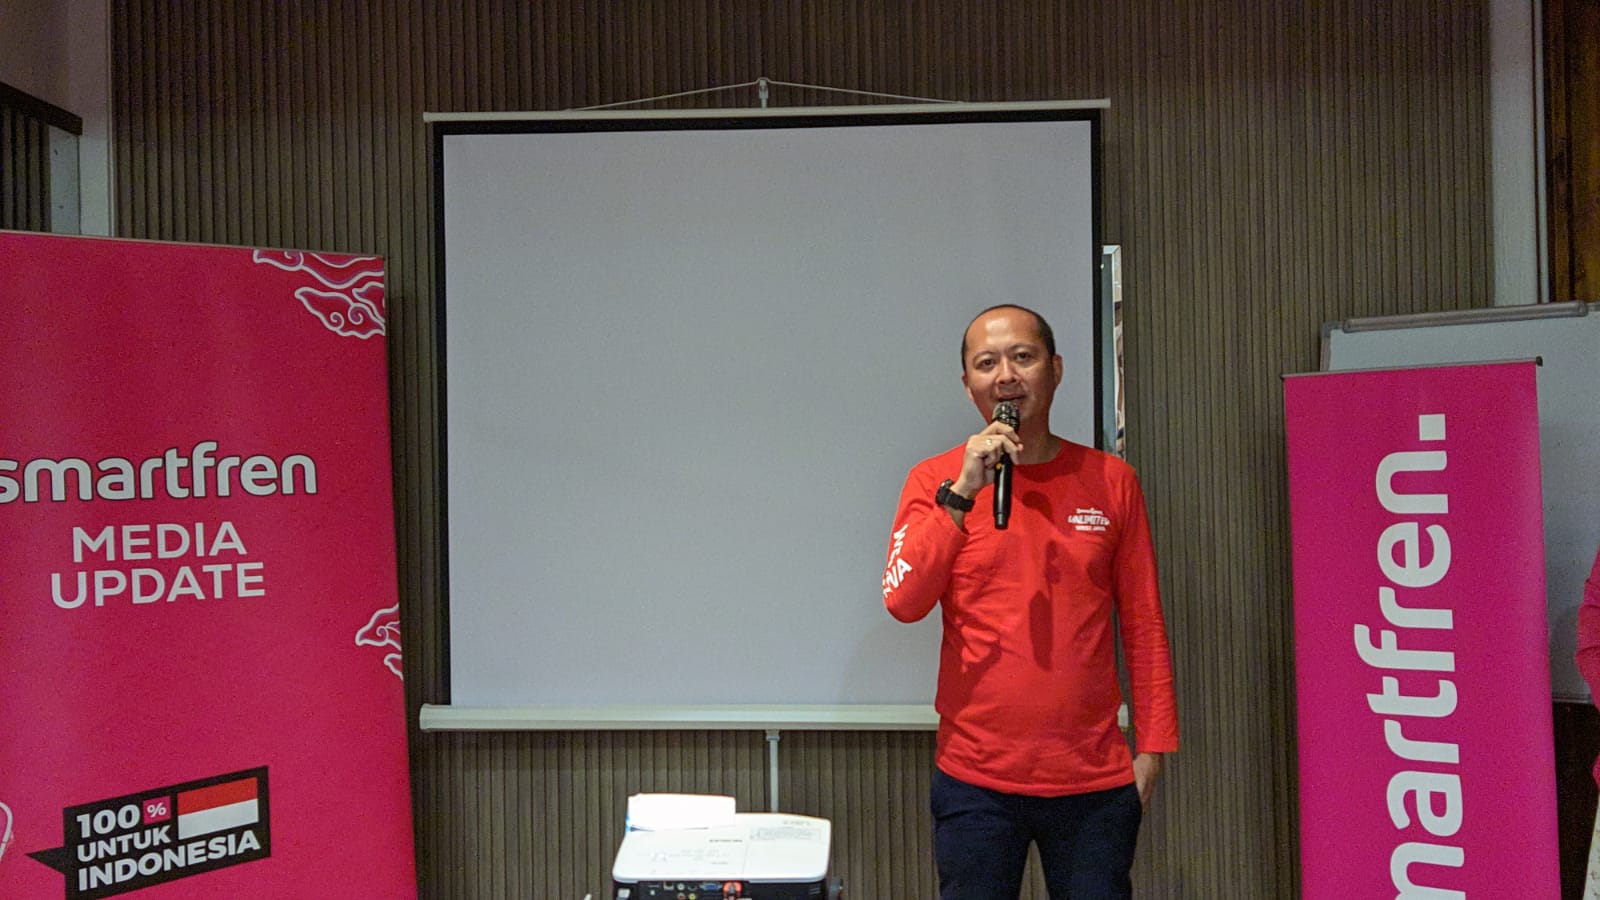 Smartfren Gelar Kompetisi Mobile Legends di Cirebon